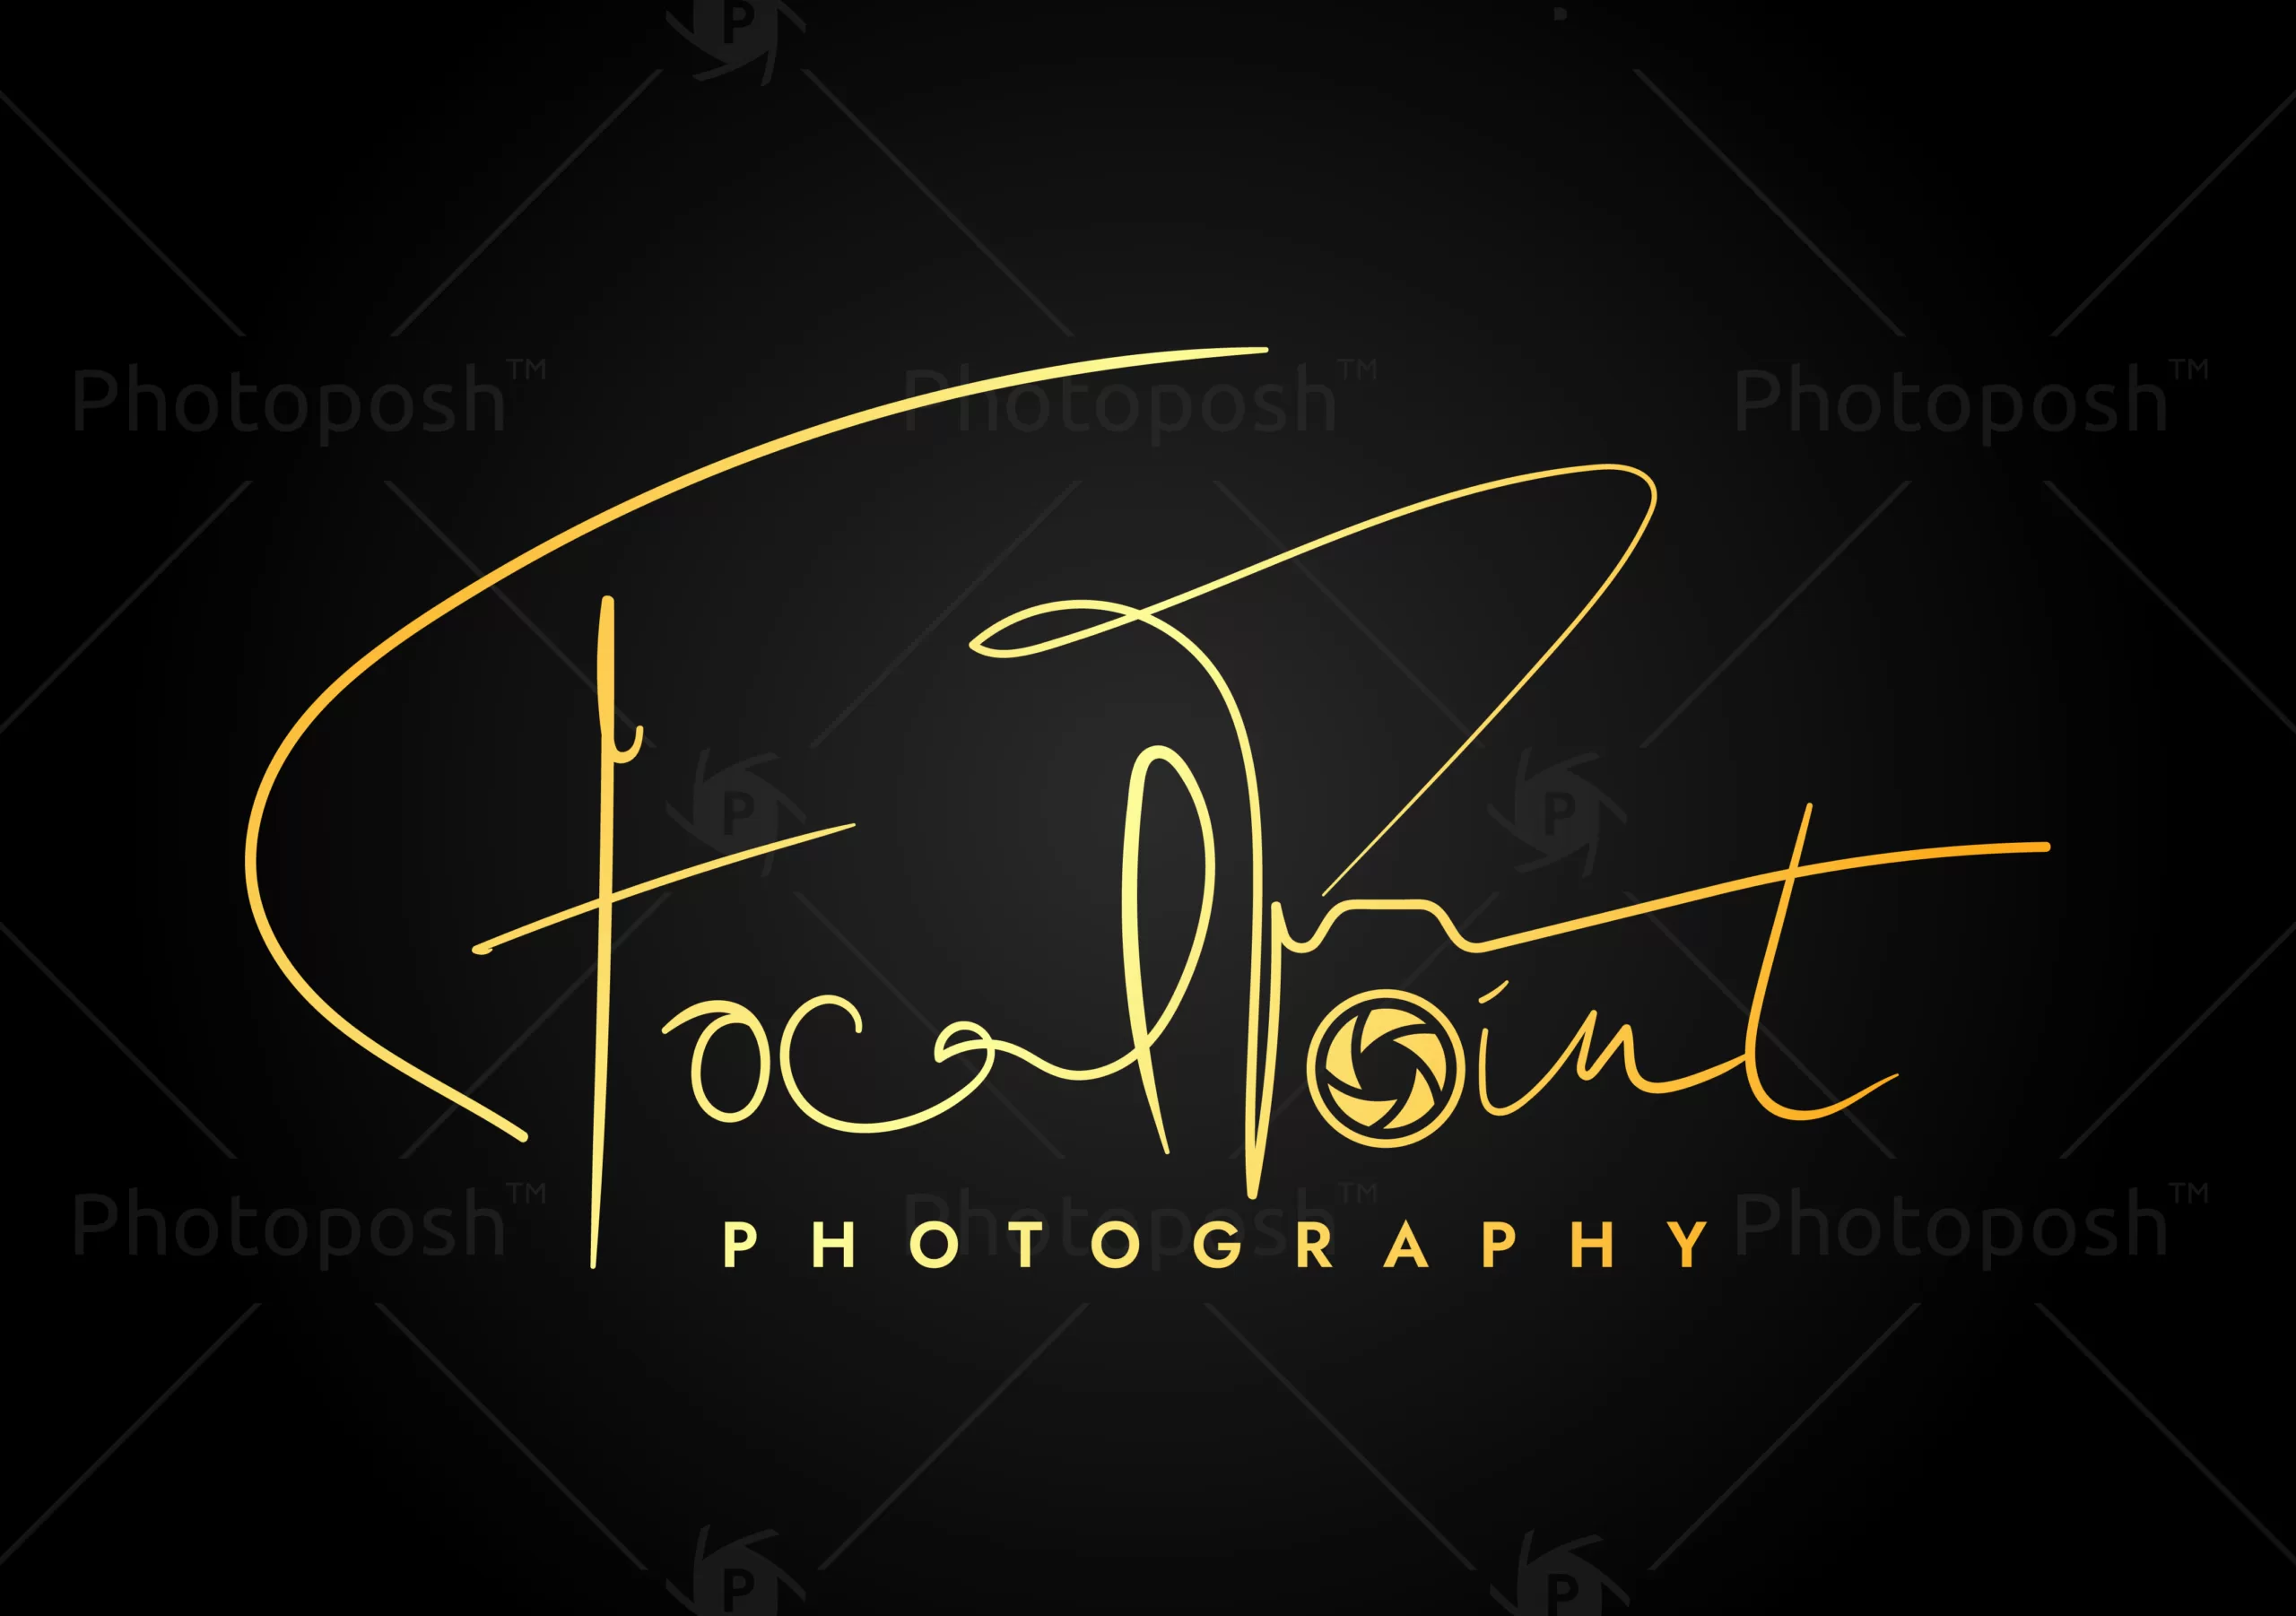 Signature photography logo